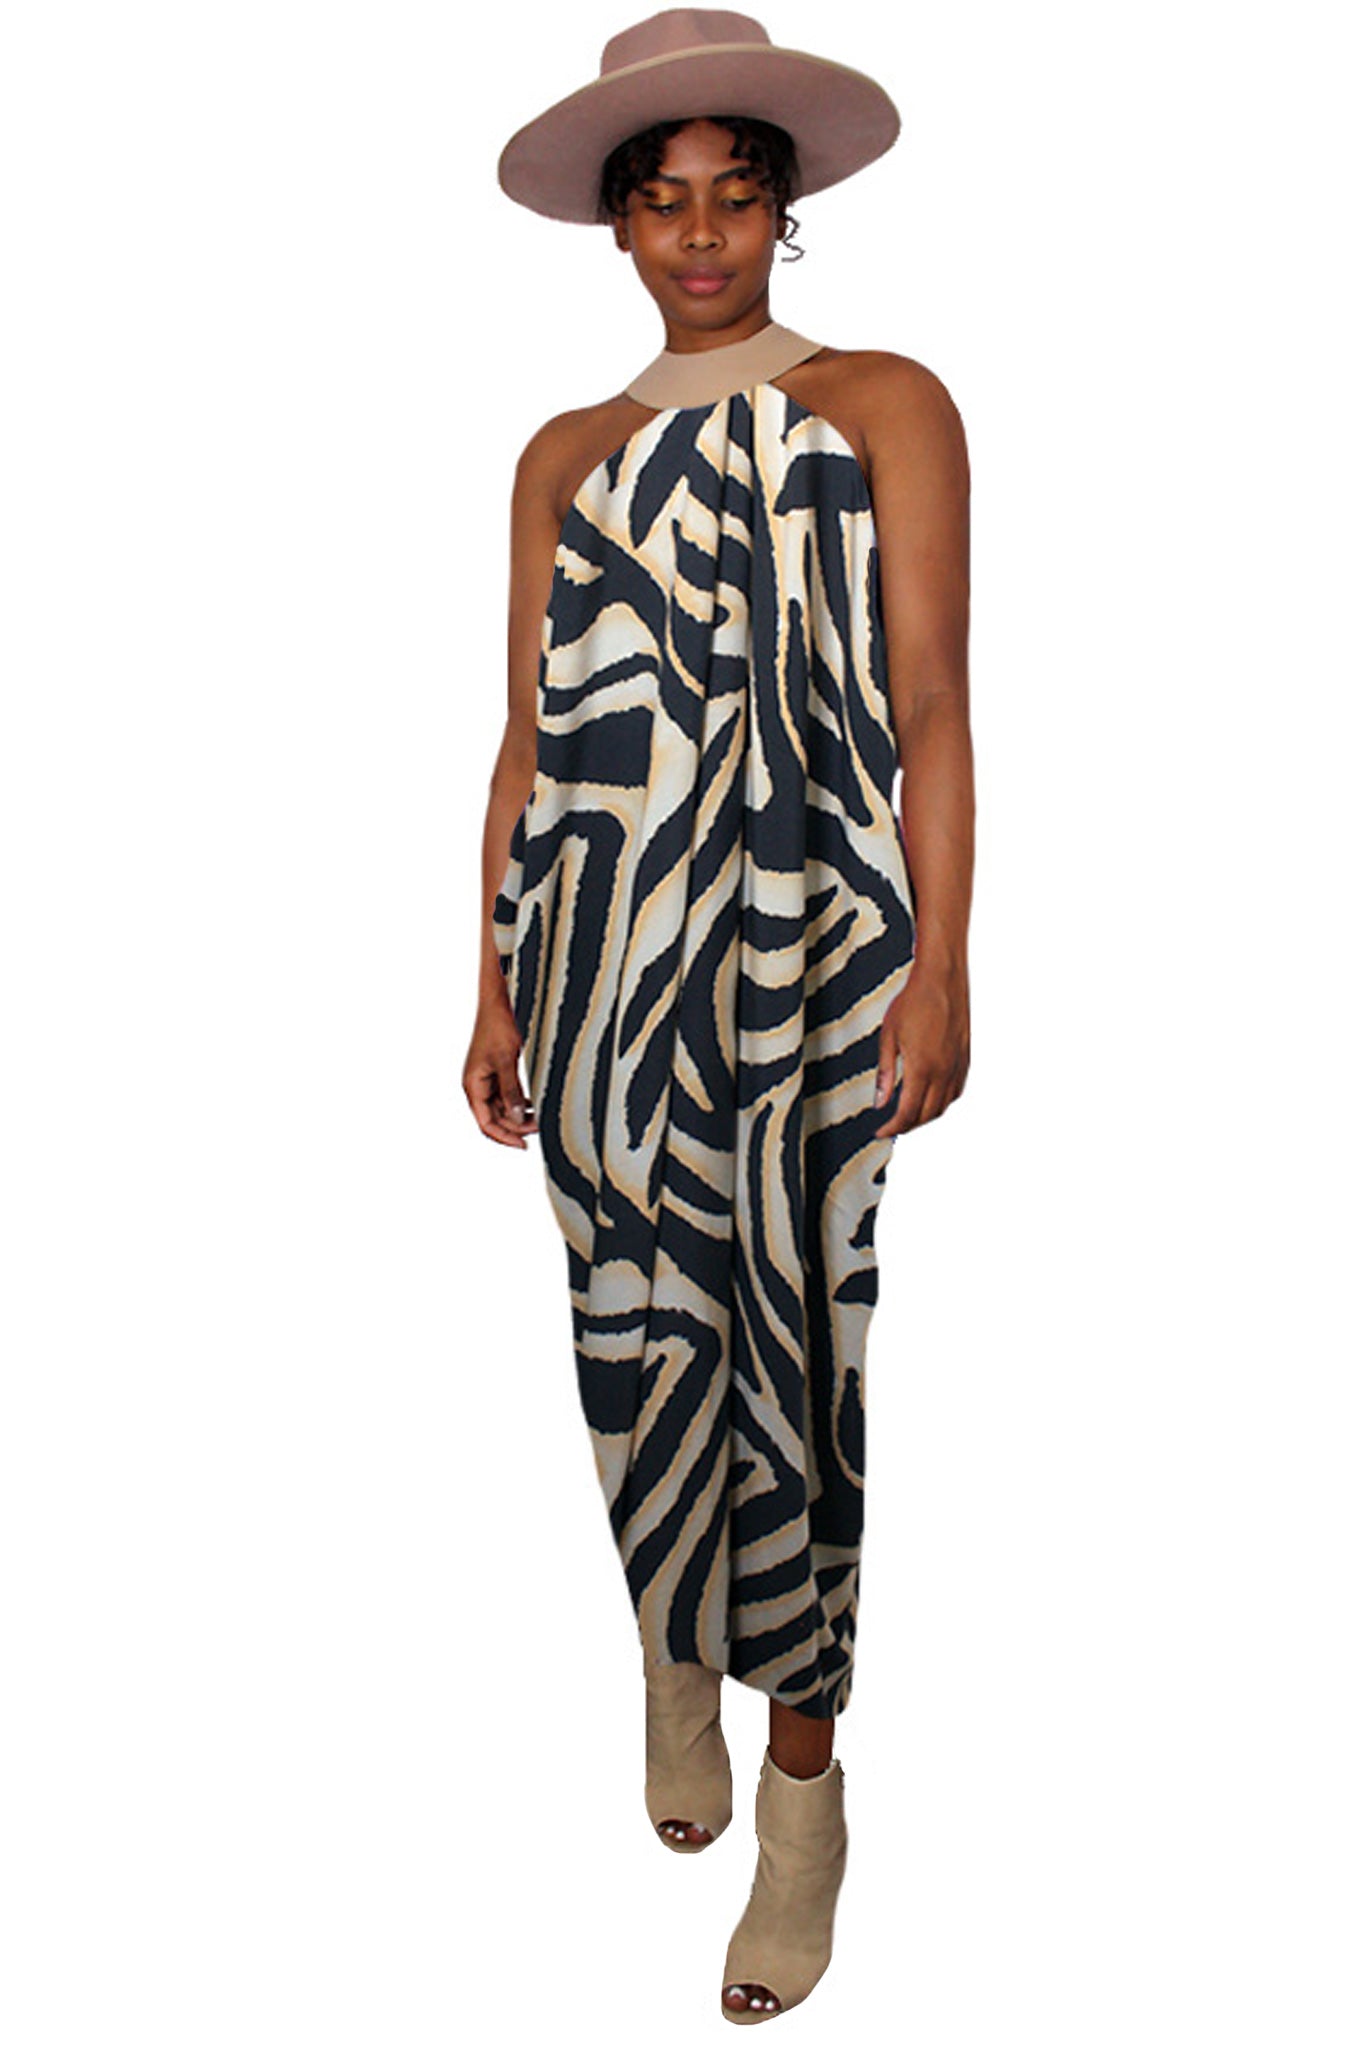 Tiger Cleopatra Dress